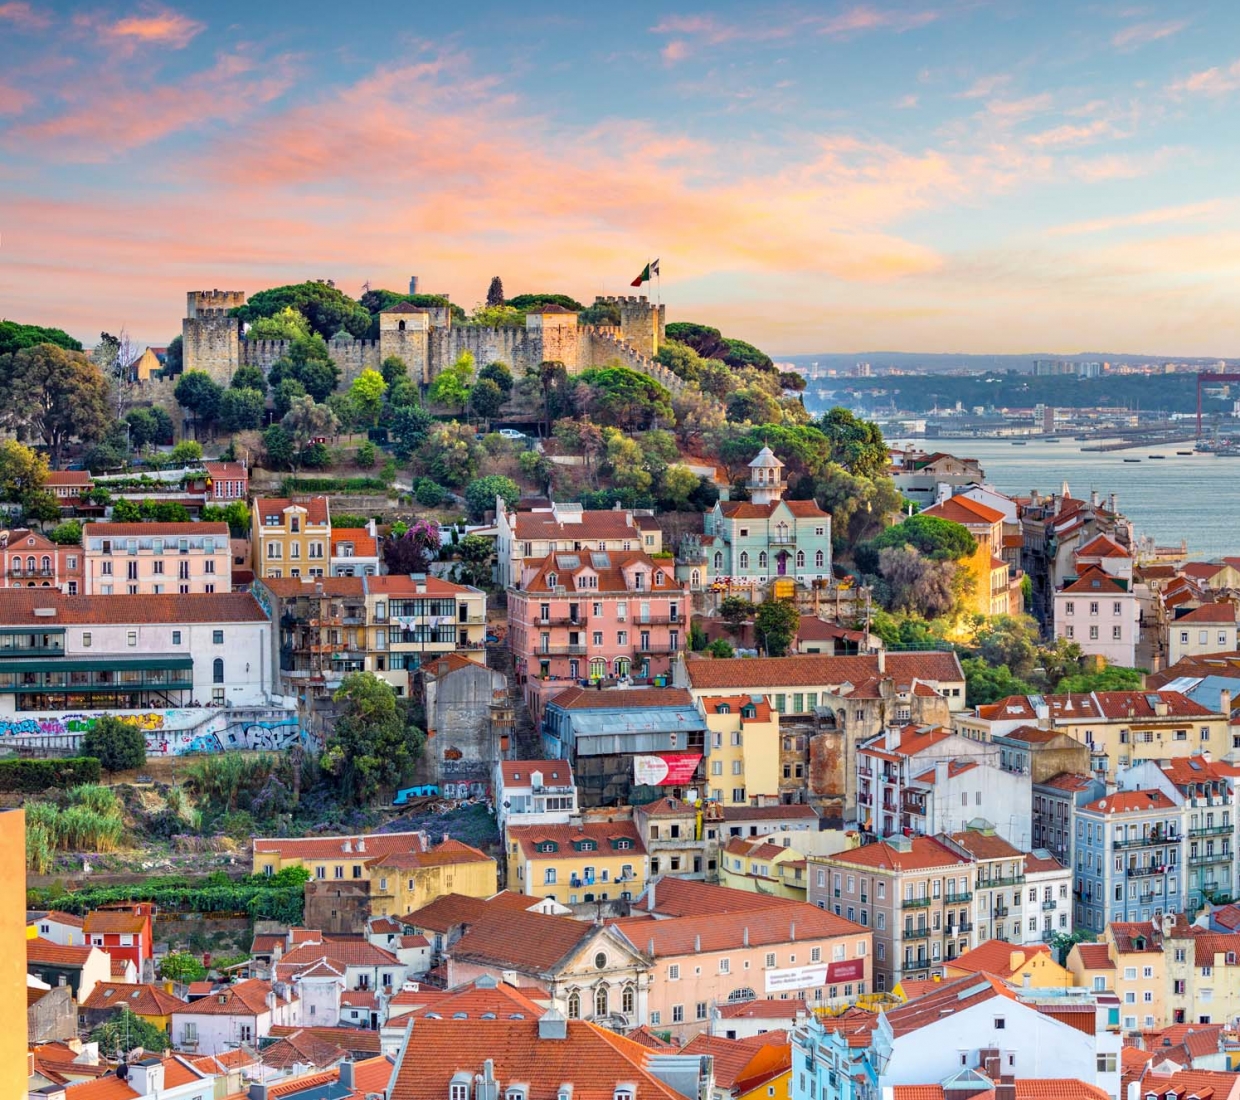 Hermosa selección de alojamientos con encanto en Lisboa